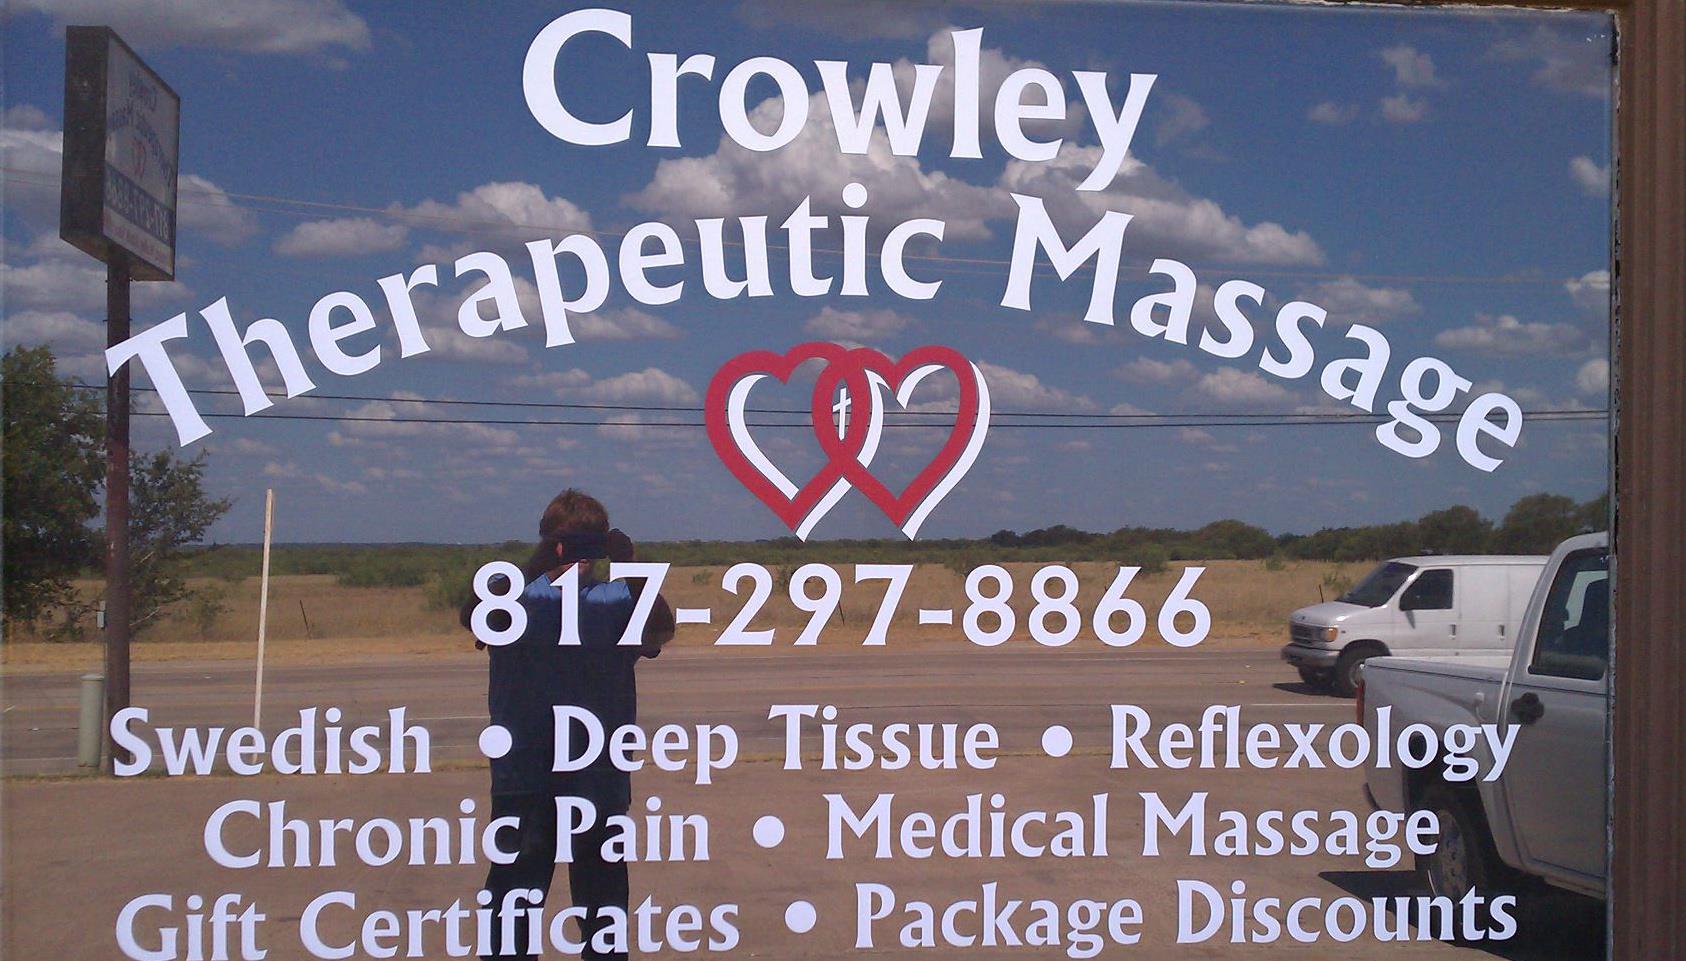 Crowley Therapeutic Massage